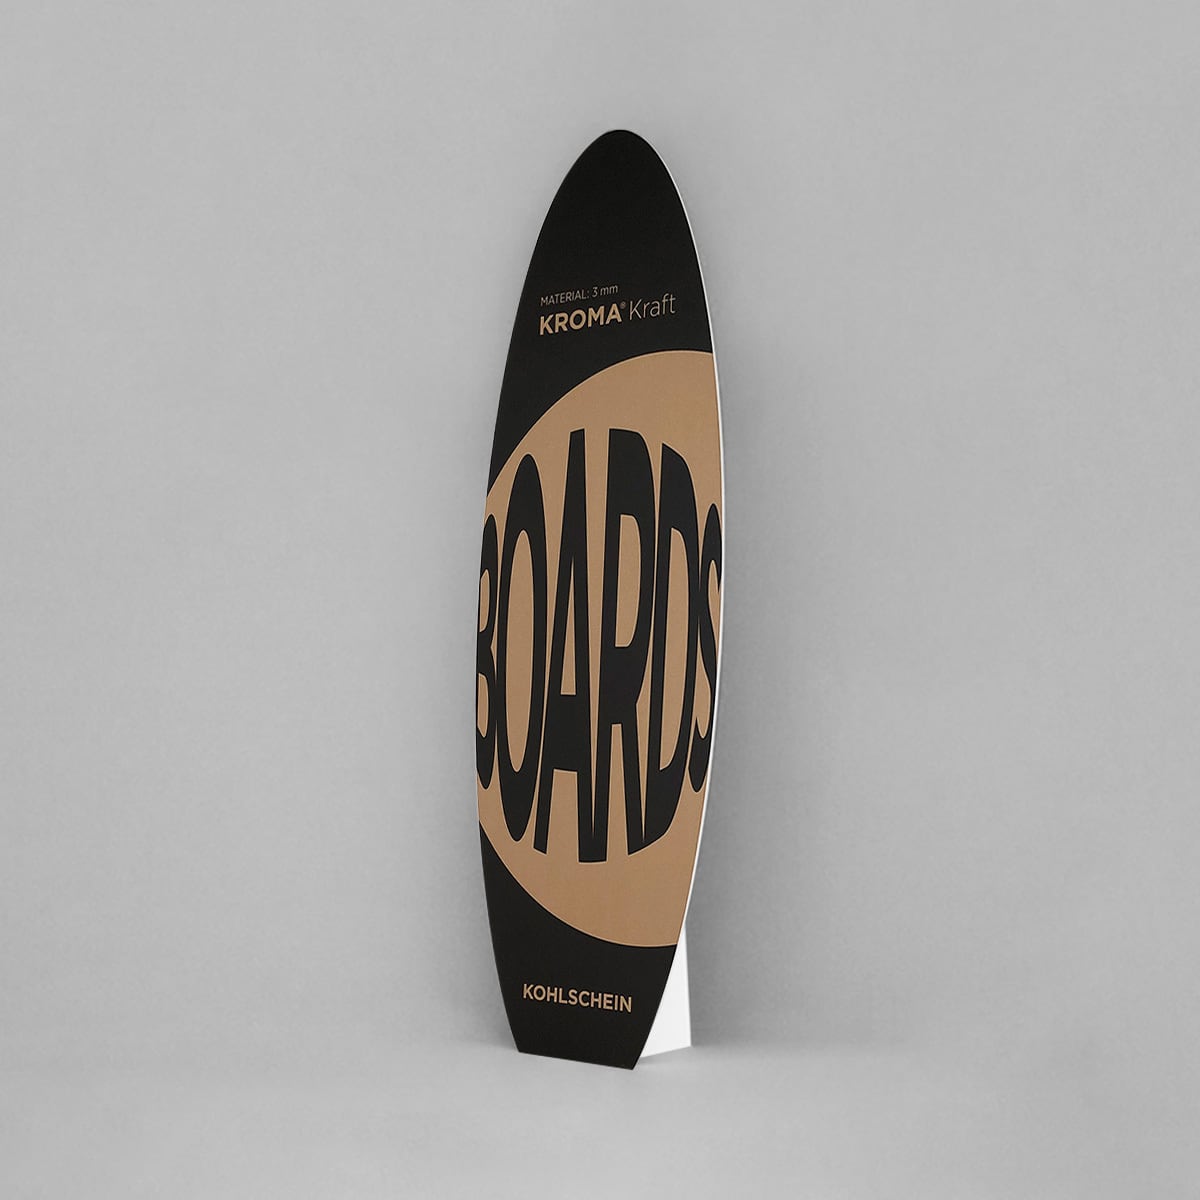 Standup surfboard from KROMA Kraft